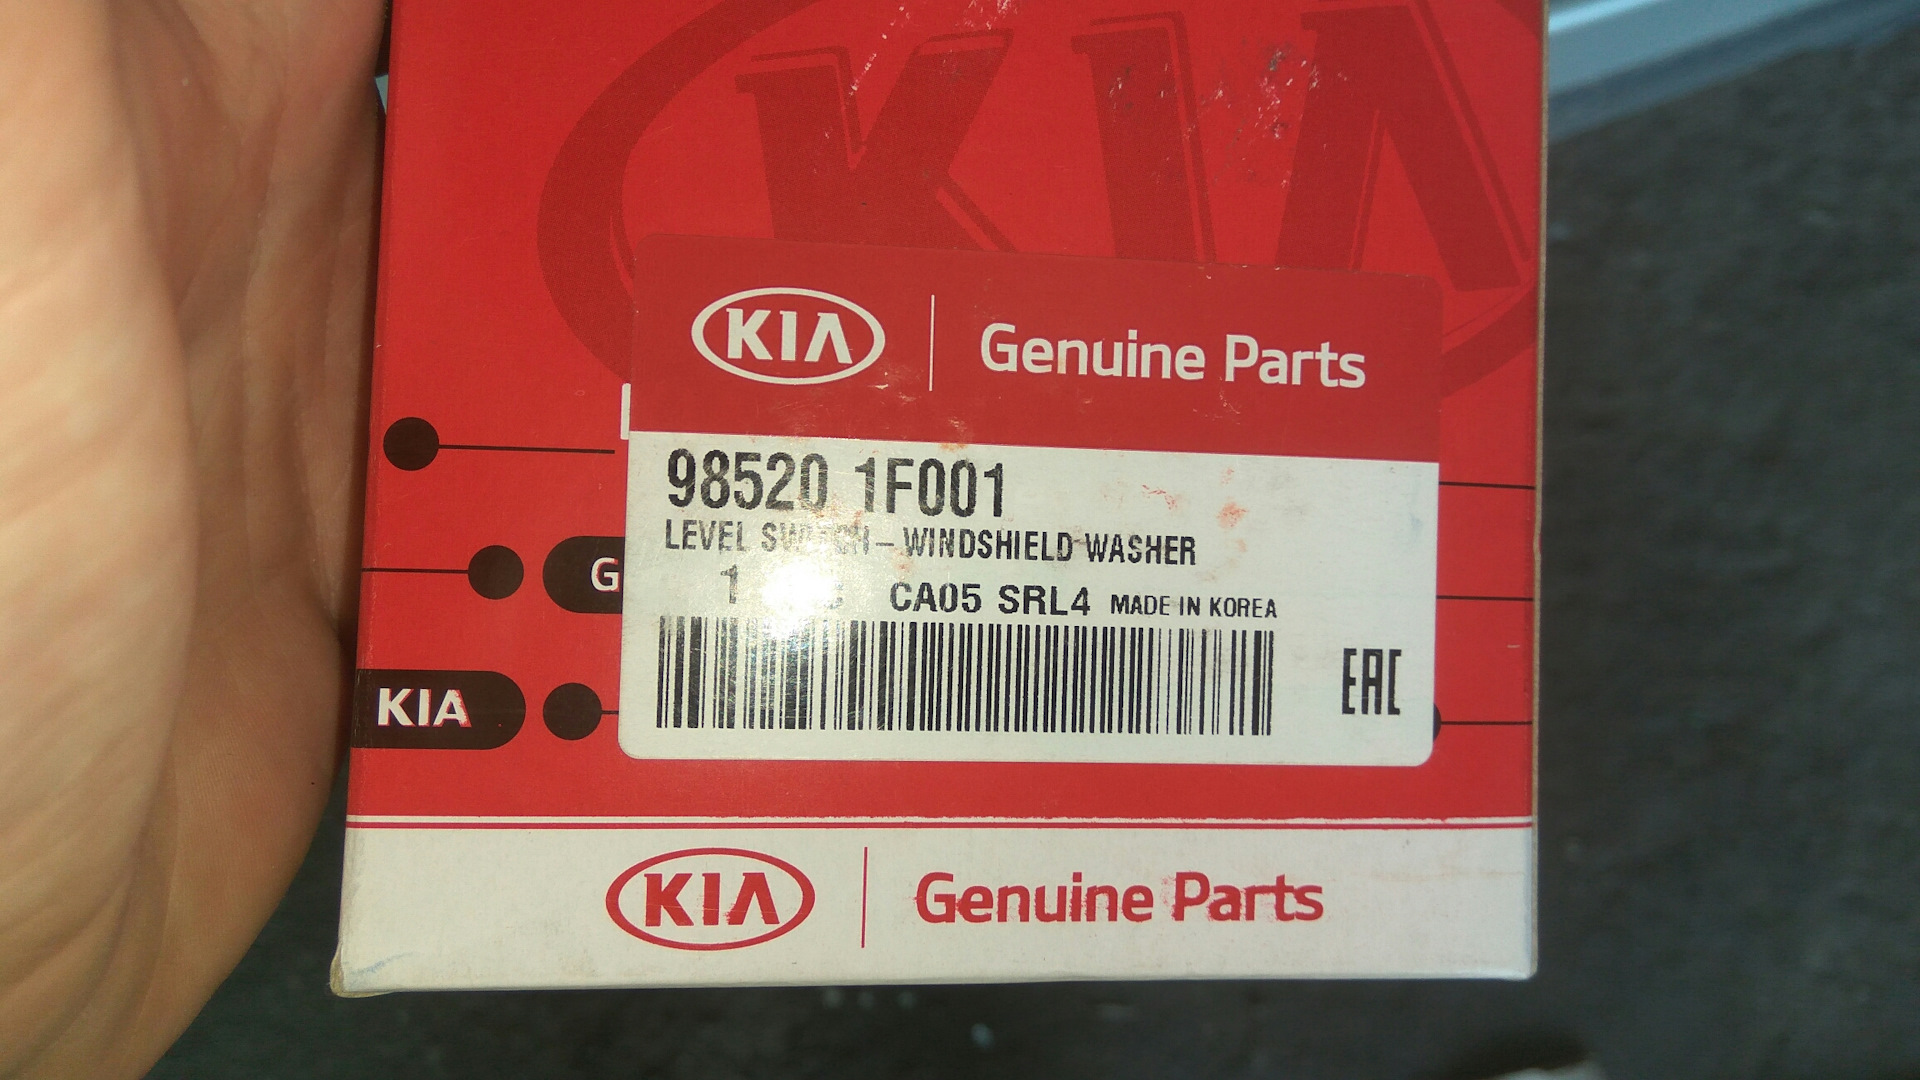 Киа сид замена датчиков. Kia Genuine Parts. Kia Genuine Parts 0k30e 18 10x. 985201f001 отличия 985201f000. 985201f001 аналоги и заменители.